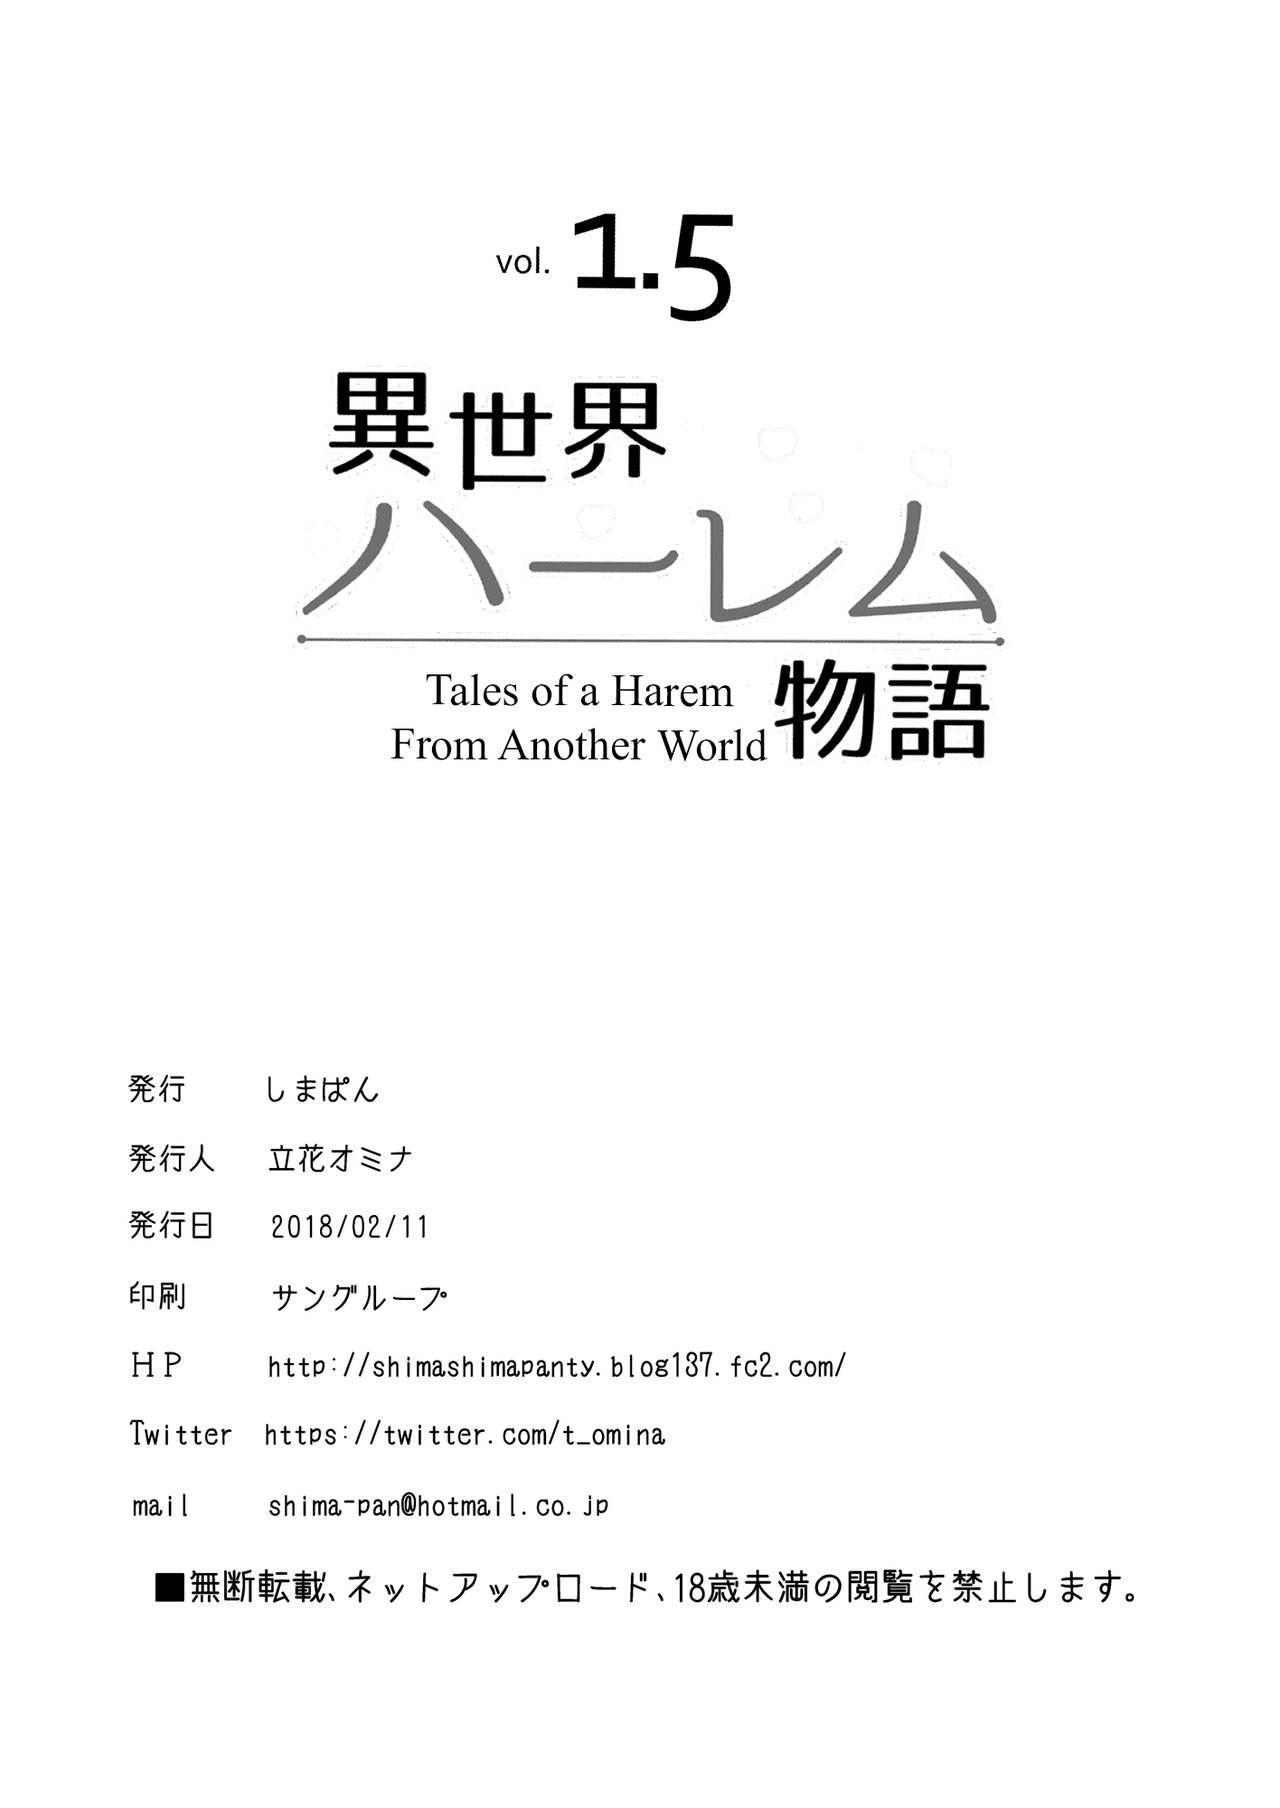 Atm Isekai Harem Monogatari - Tales of Harem Vol. 1.5｜Tales of a Harem from Another World Vol. 1.5 - Original Tamil - Page 8